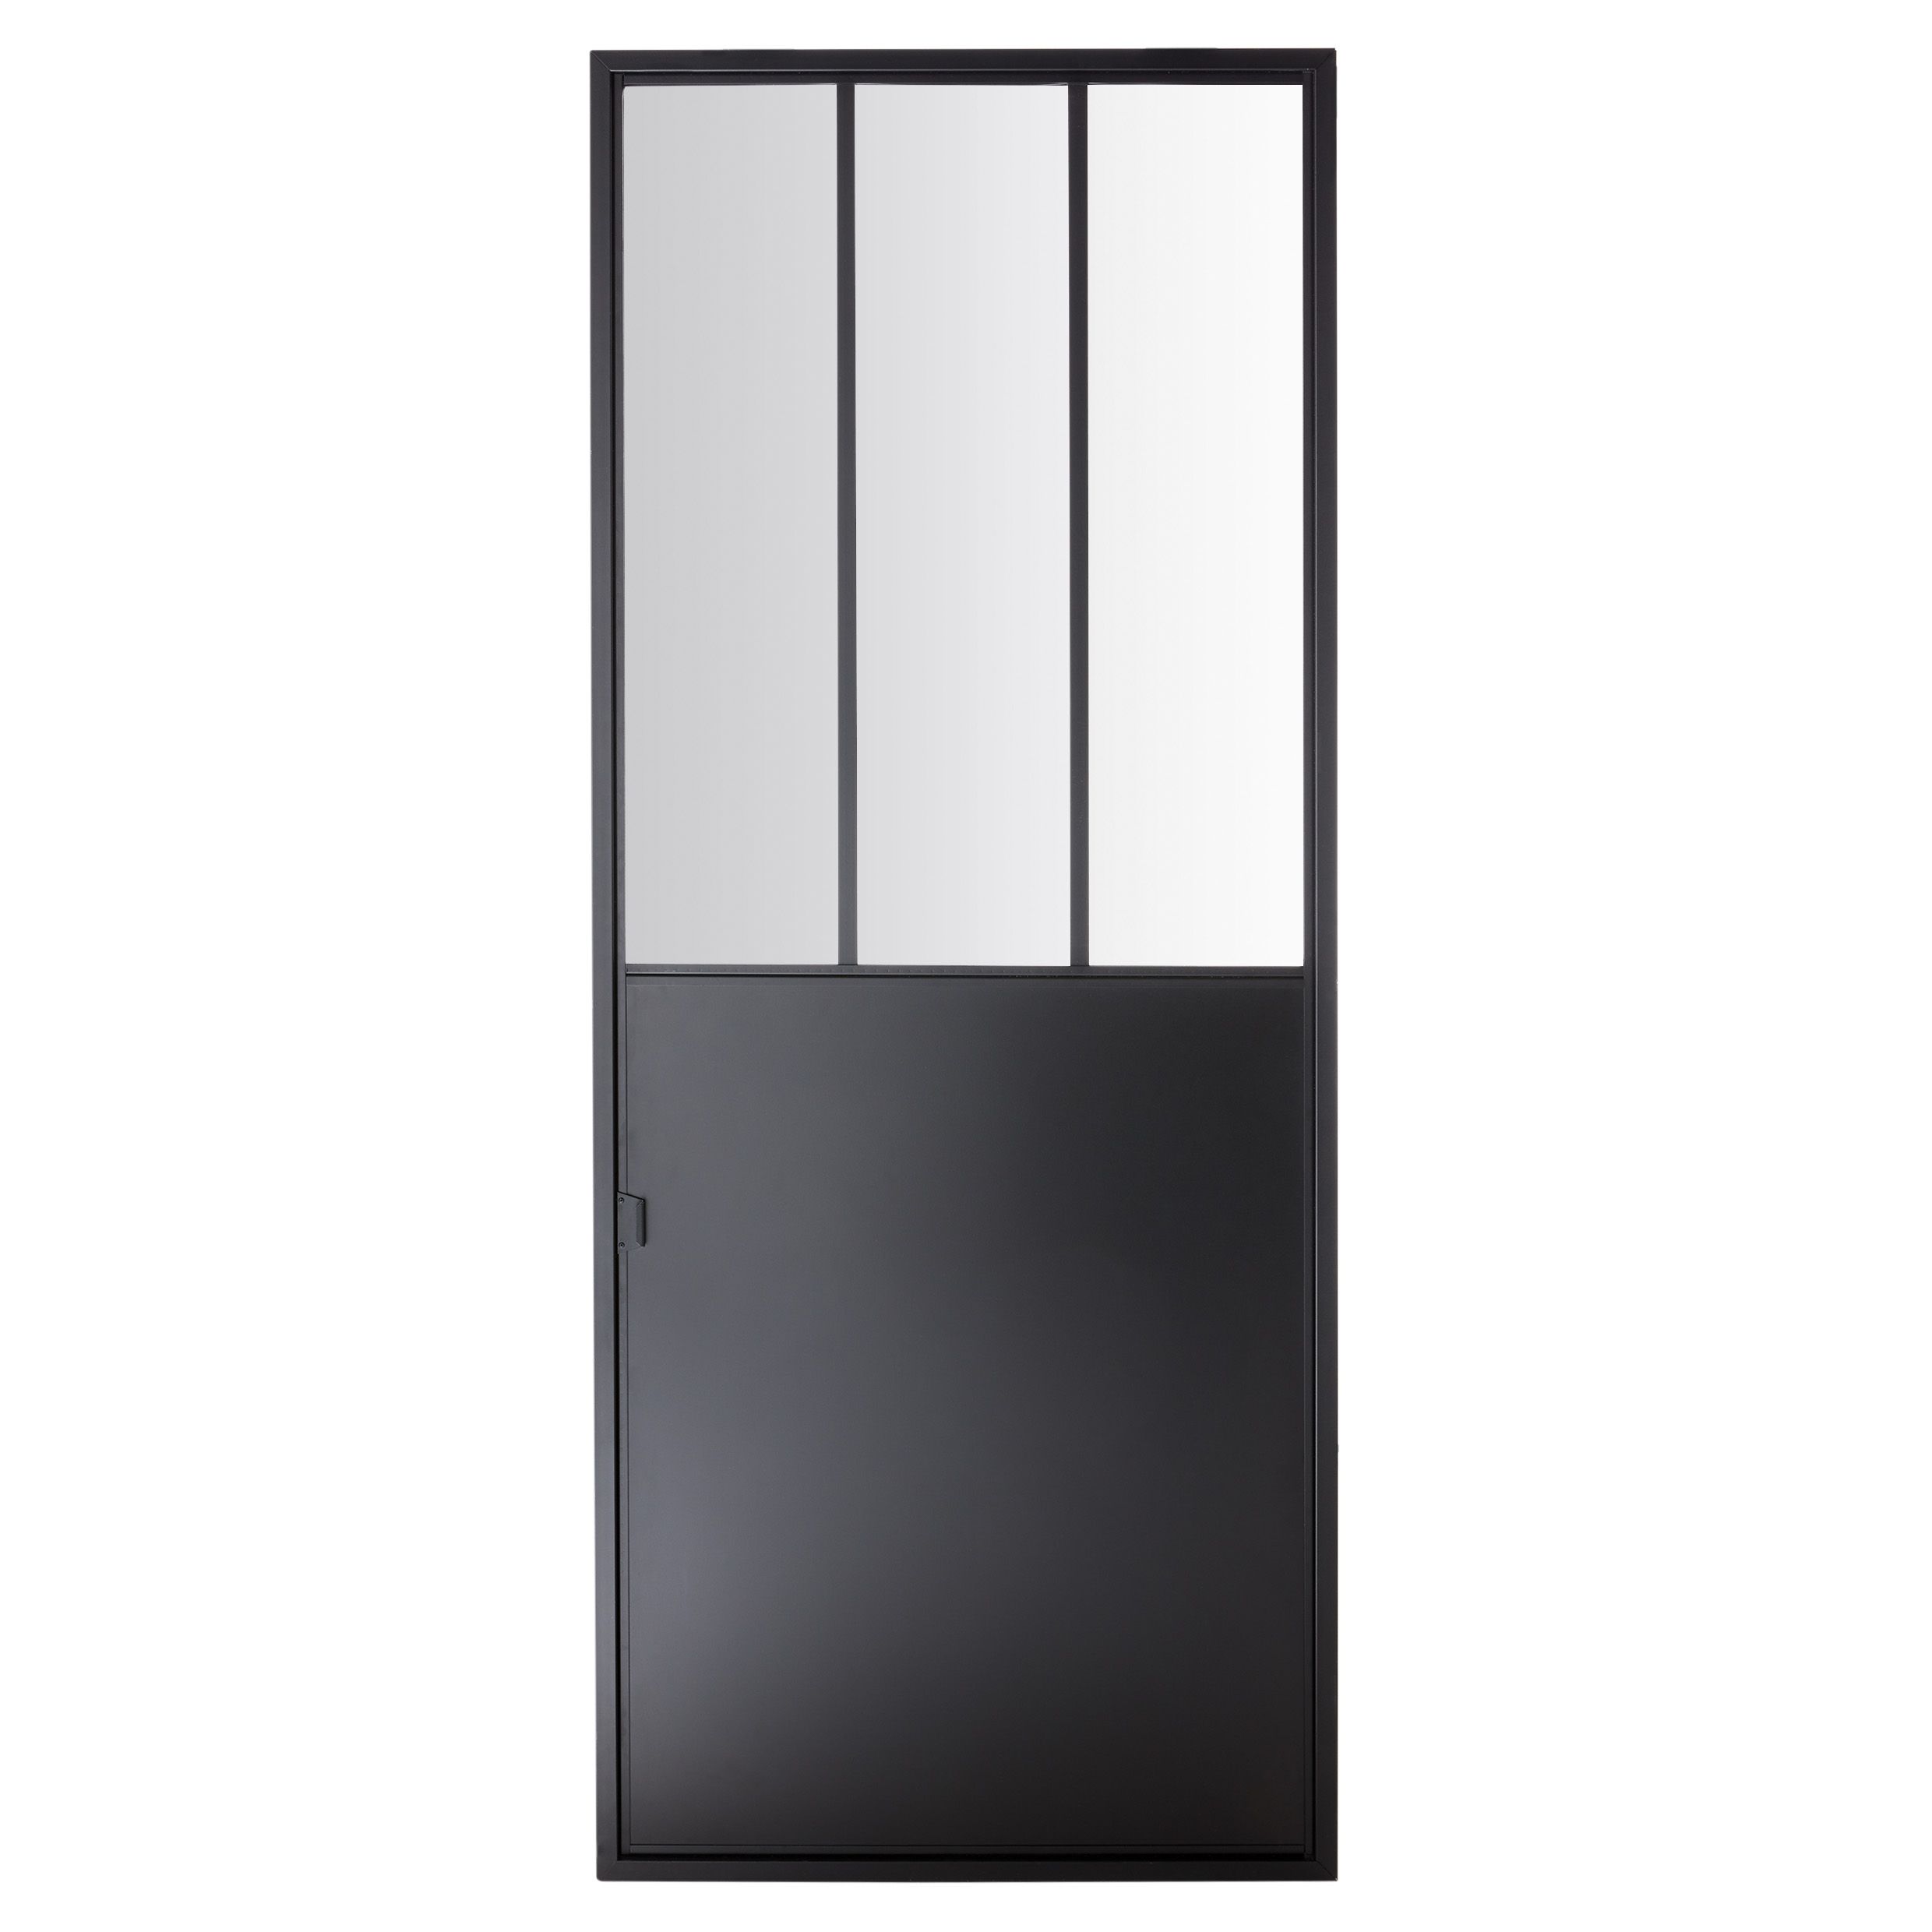 2 Panel Glazed Industrial Black Powder Coated Steel Internal Sliding Door H 2040mm W 830mm Departments Diy At B Q